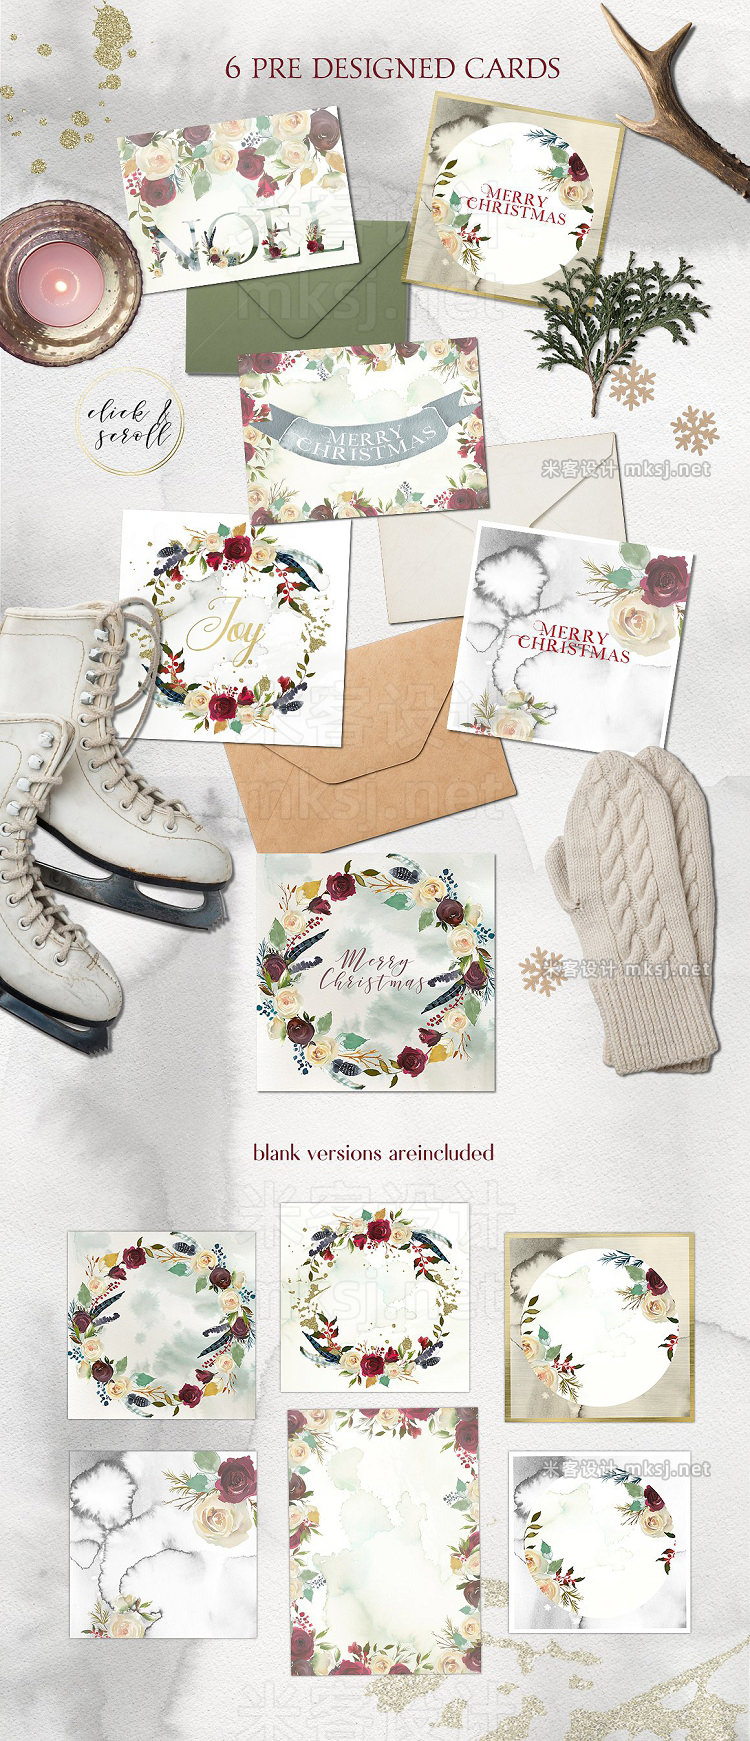 png素材 Winter Solemnity Floral Design Kit